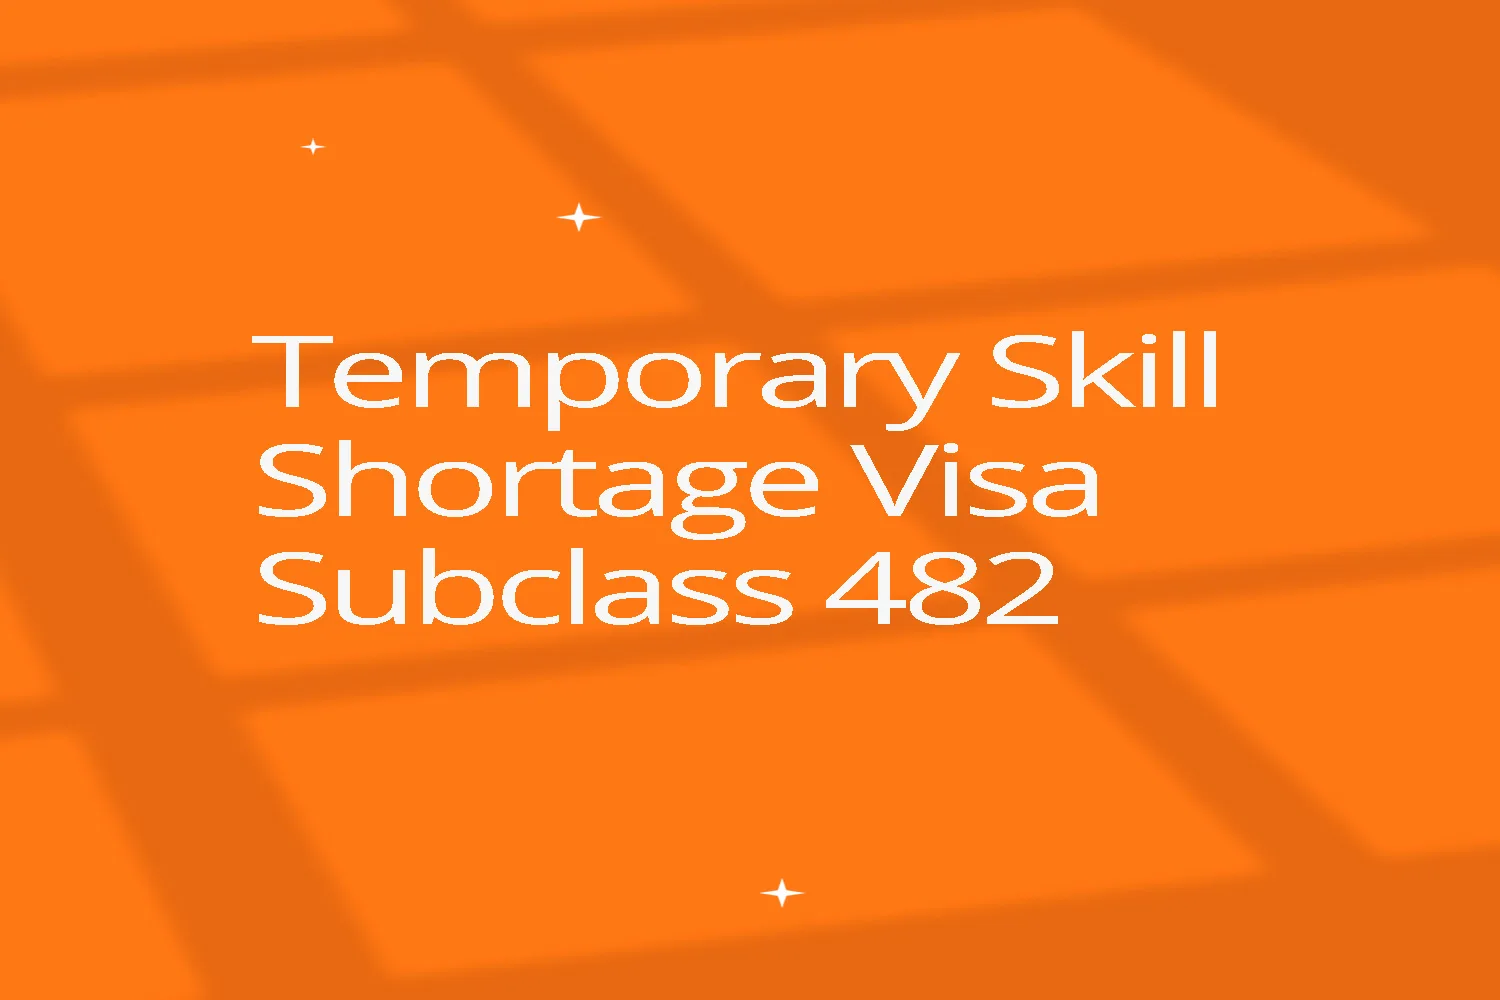 temporary skill shortage tss 482 visa ozlinks.au